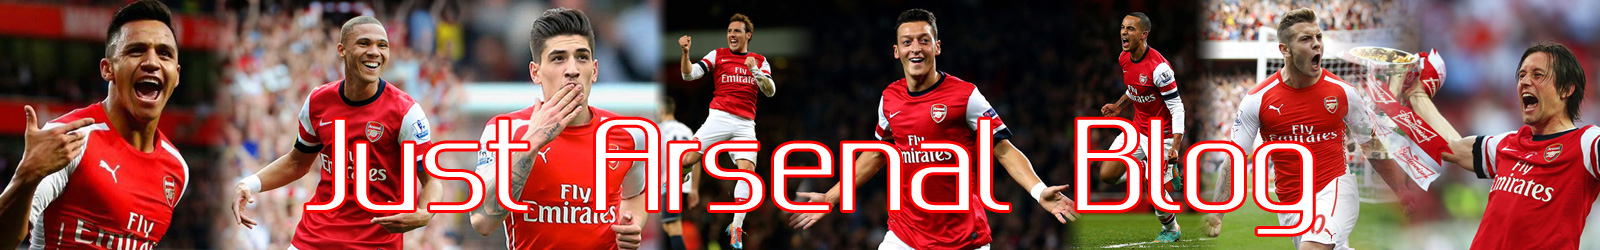 Just Arsenal Blog